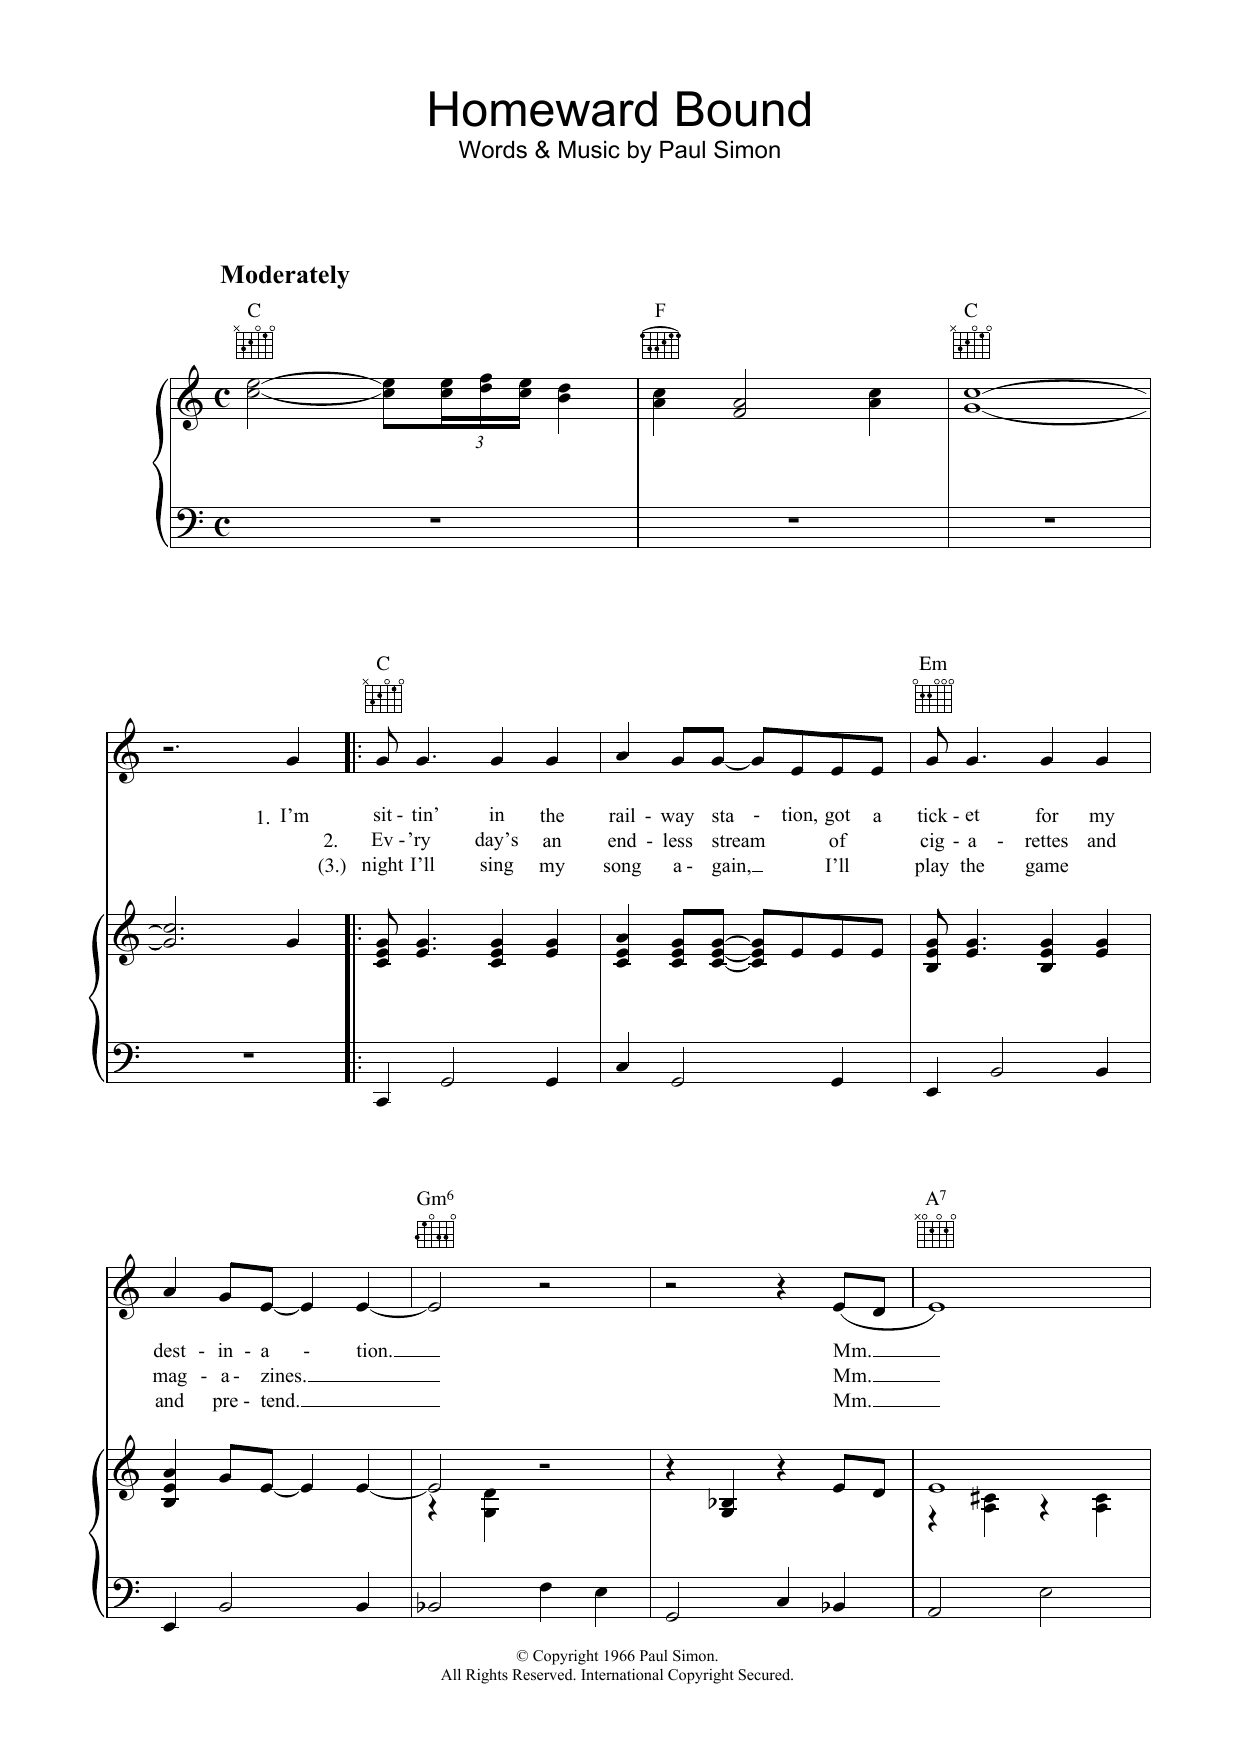 Download Simon & Garfunkel Homeward Bound Sheet Music and learn how to play Lyrics & Piano Chords PDF digital score in minutes